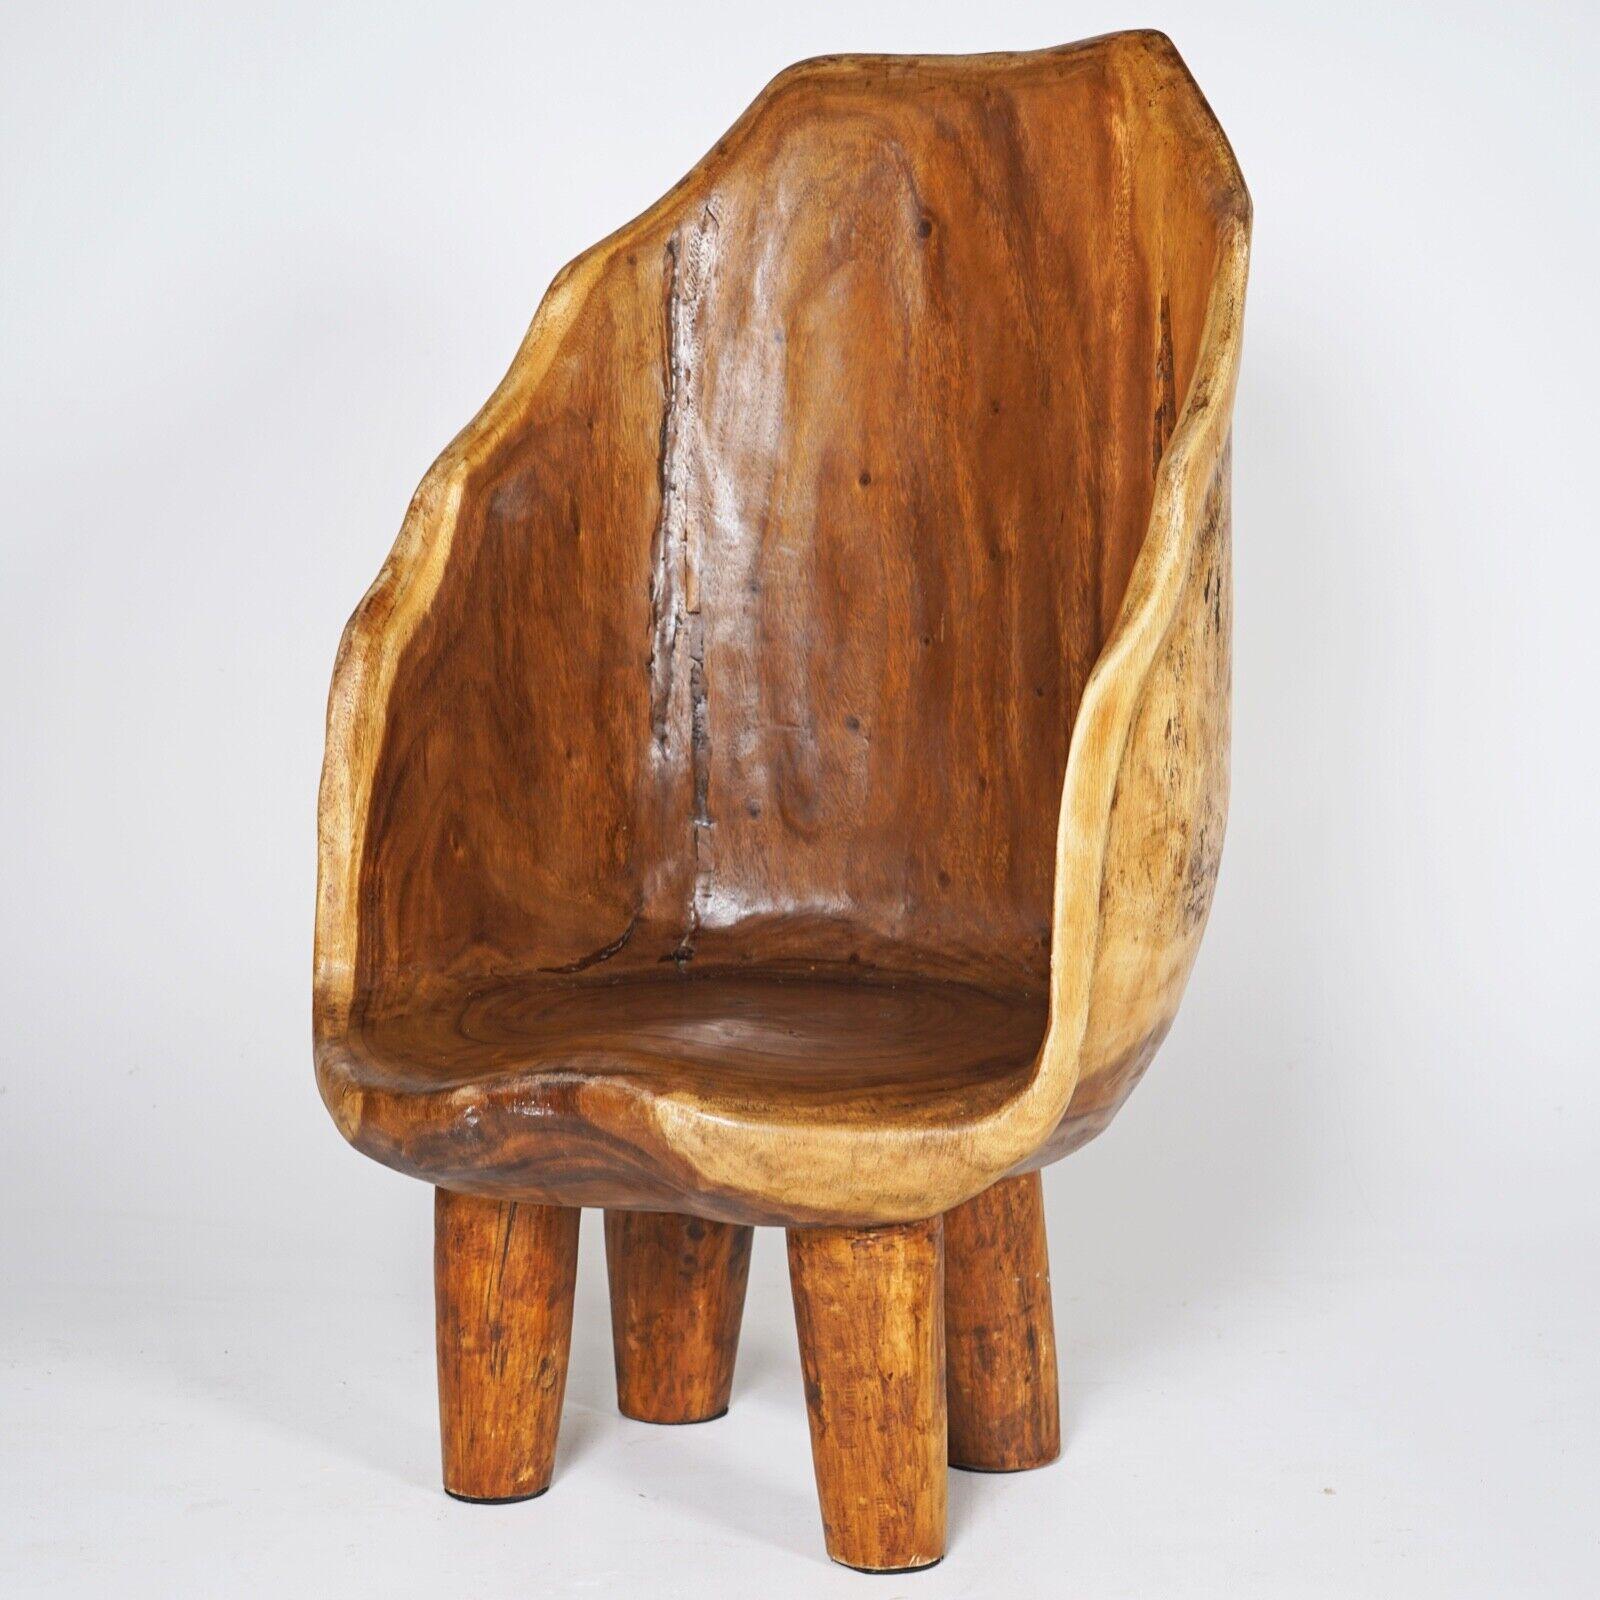 Indian Hand Carved Naga Wooden Barrel Back Chair, Sculptural Functional Art Piece